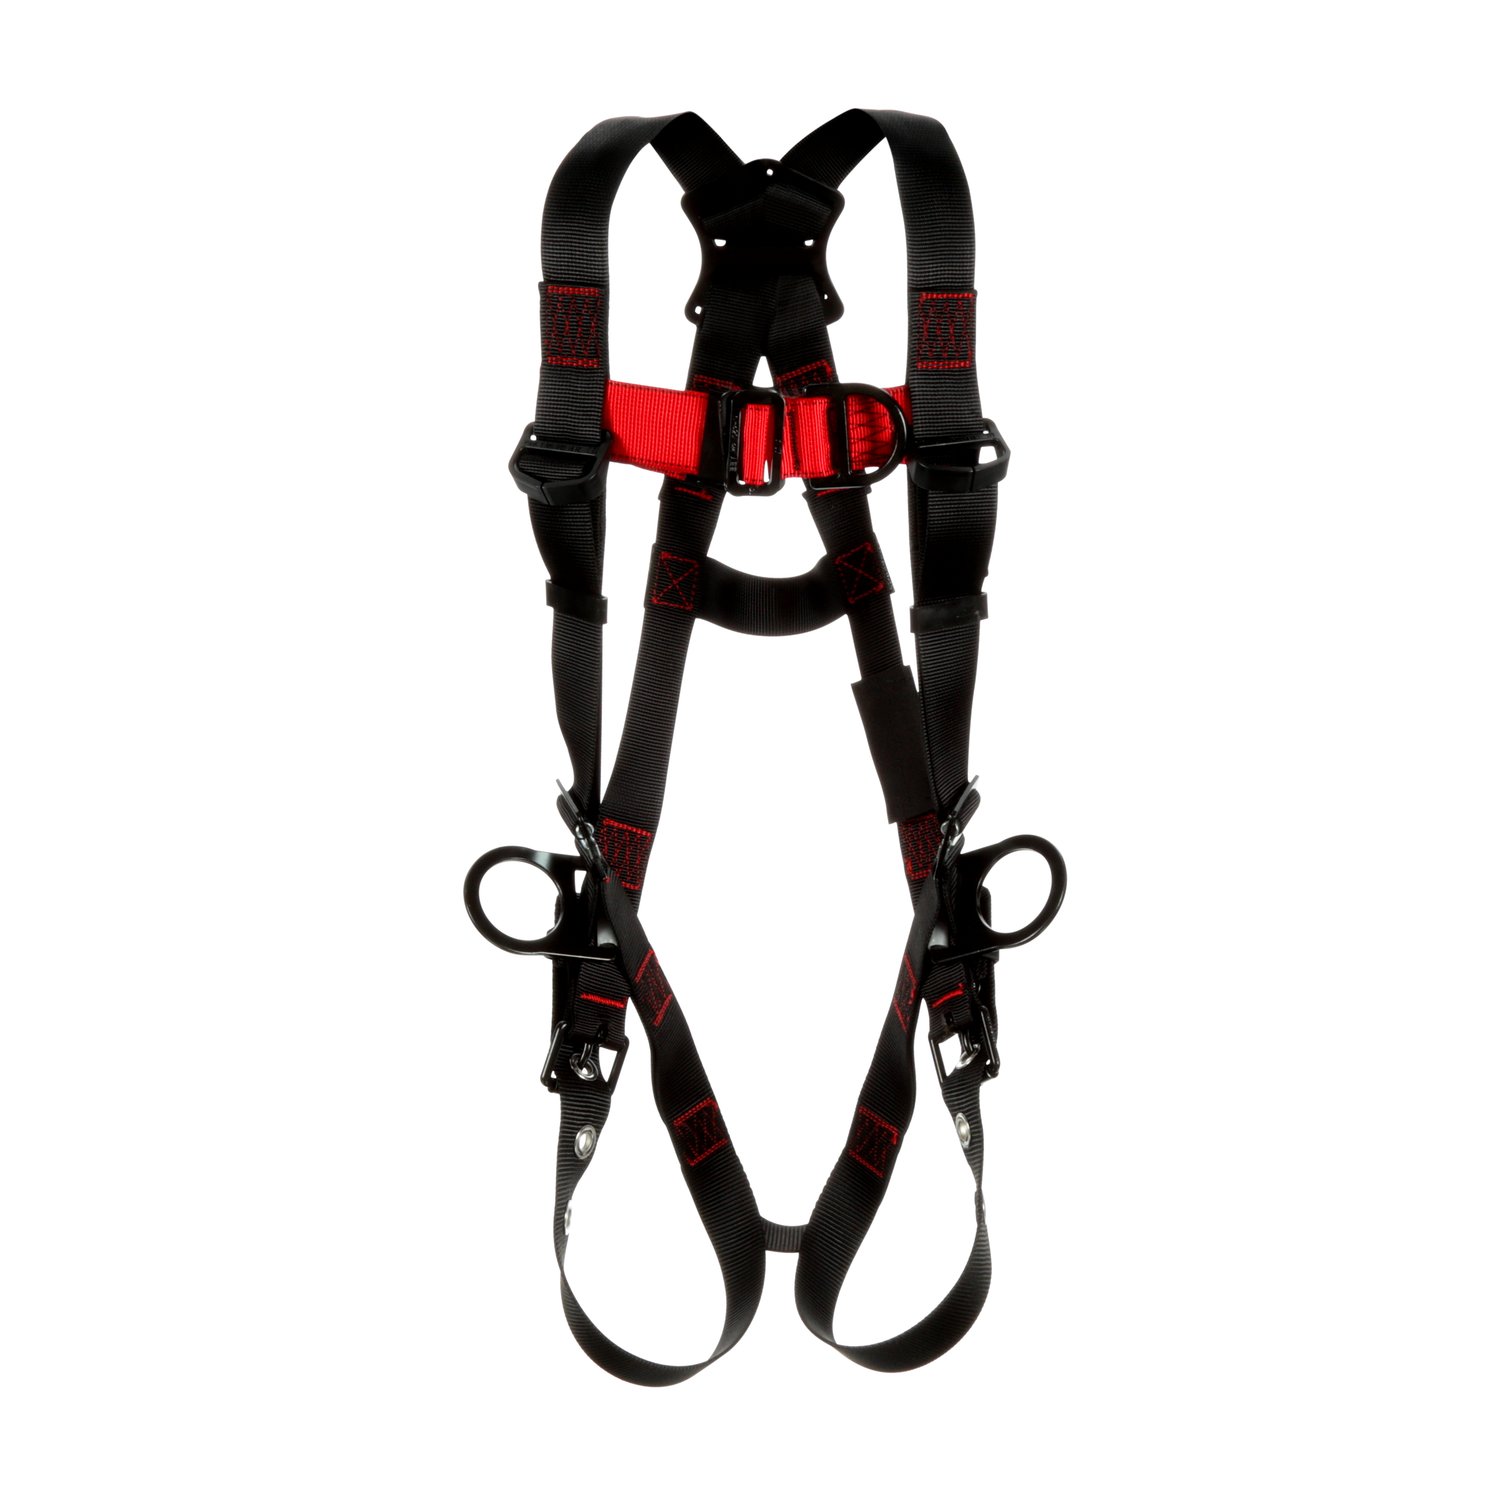 7100184602 - 3M Protecta P200 Vest Climbing/Positioning Safety Harness 1161507,
Medium/Large